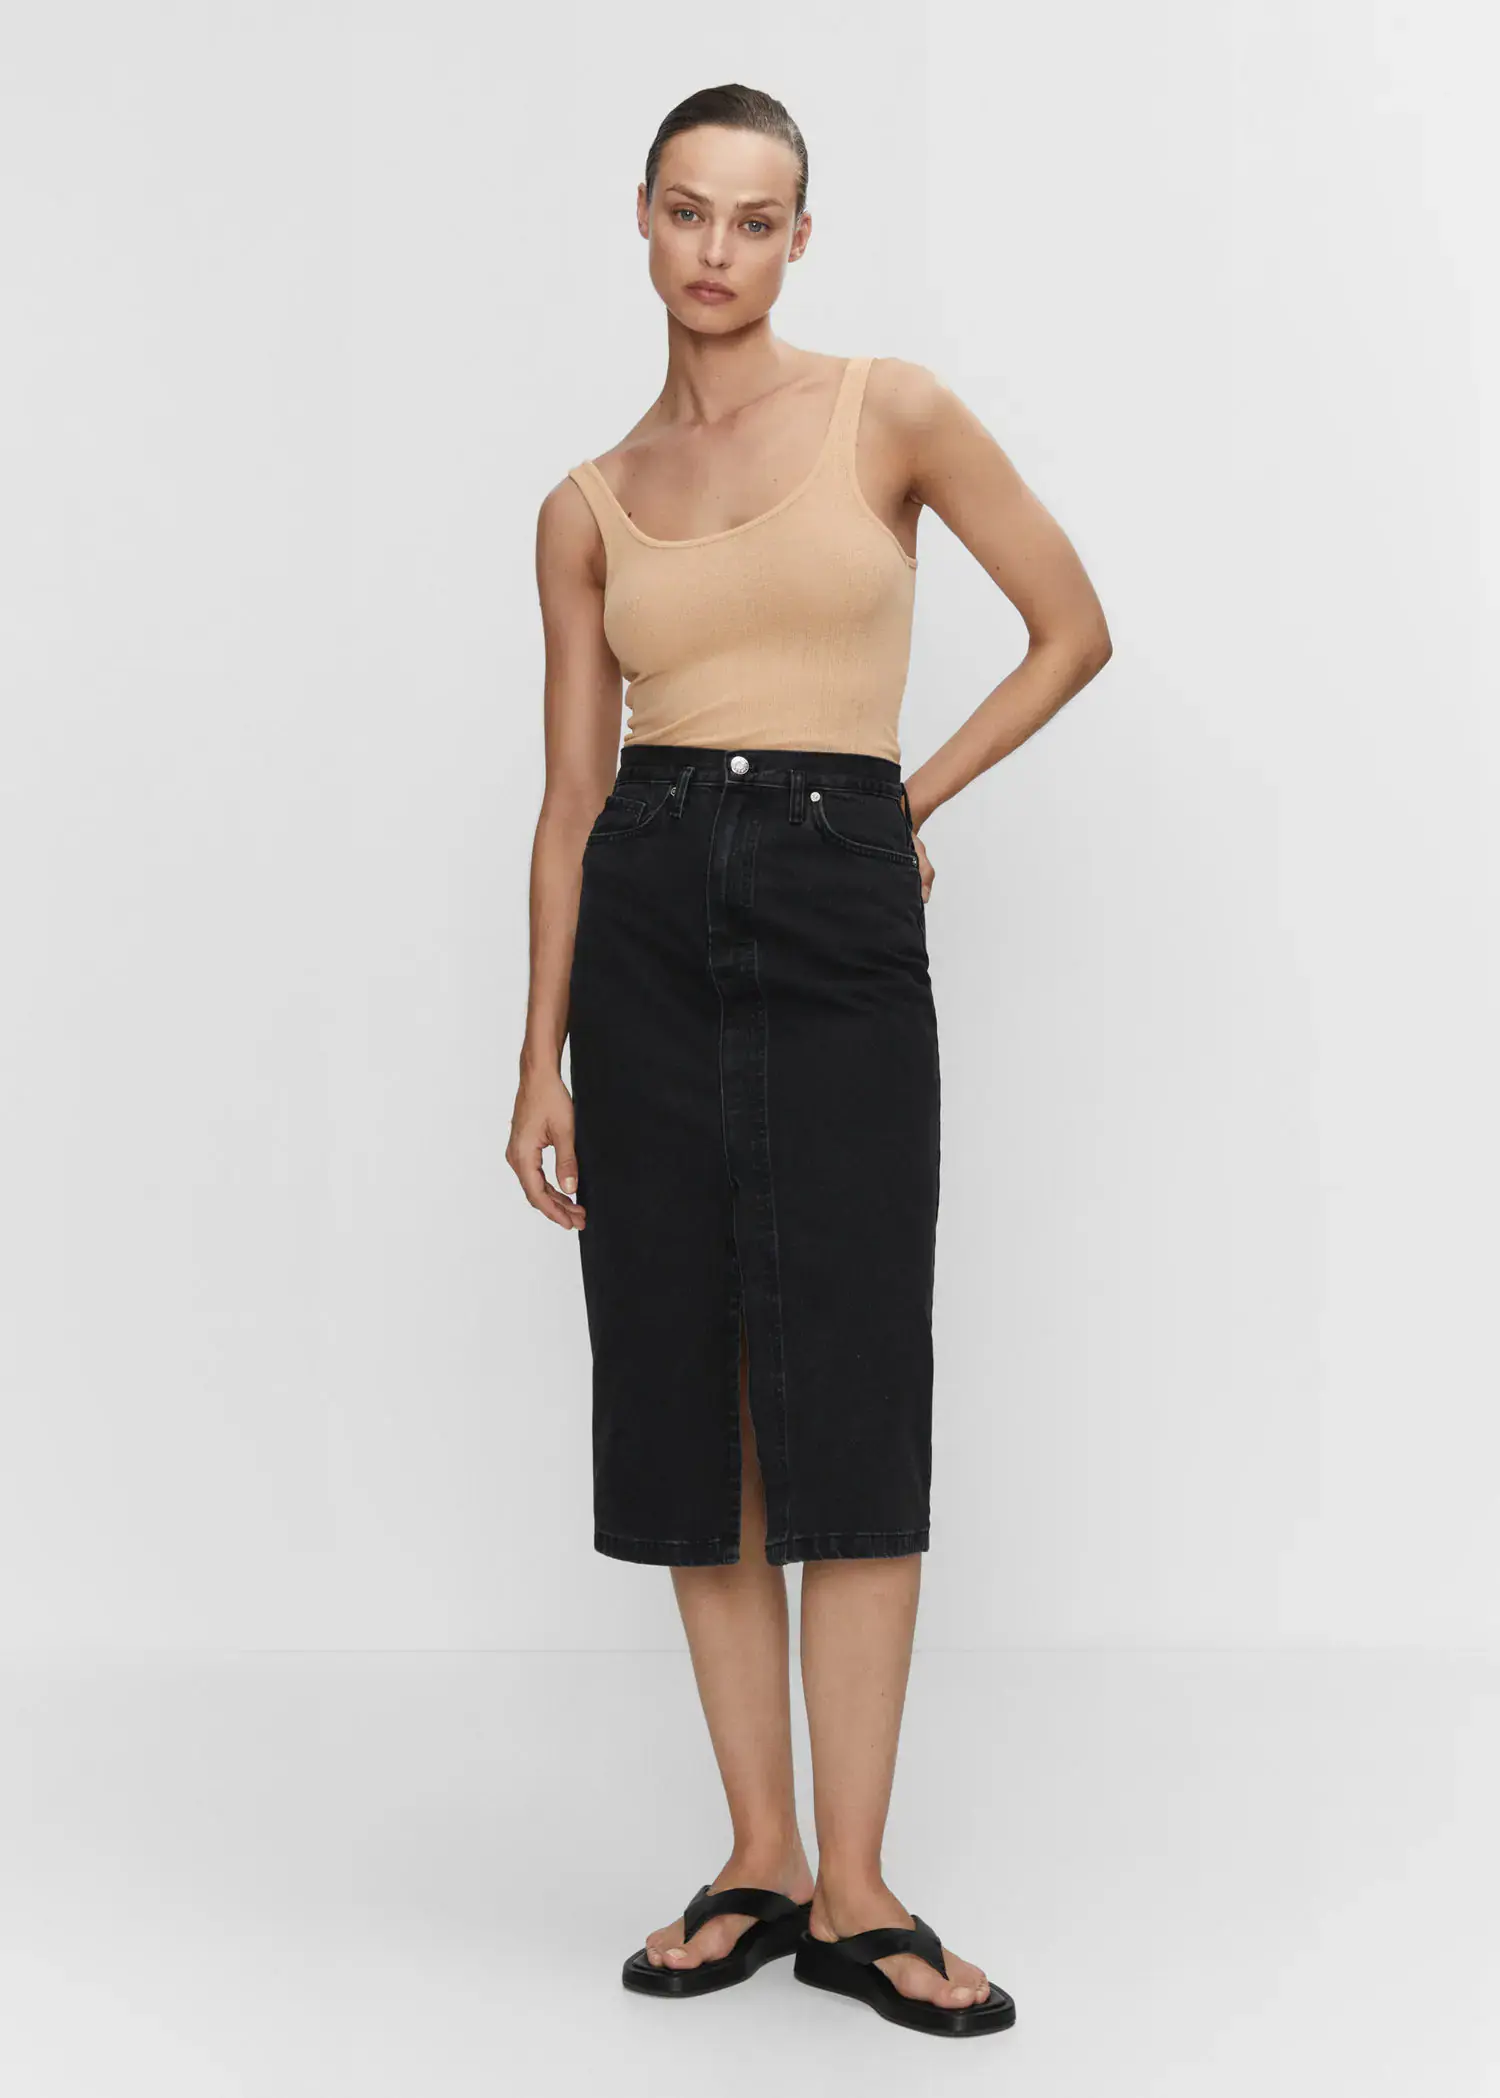 Mango Denim midi-skirt. a woman in a tan tank top and black skirt. 